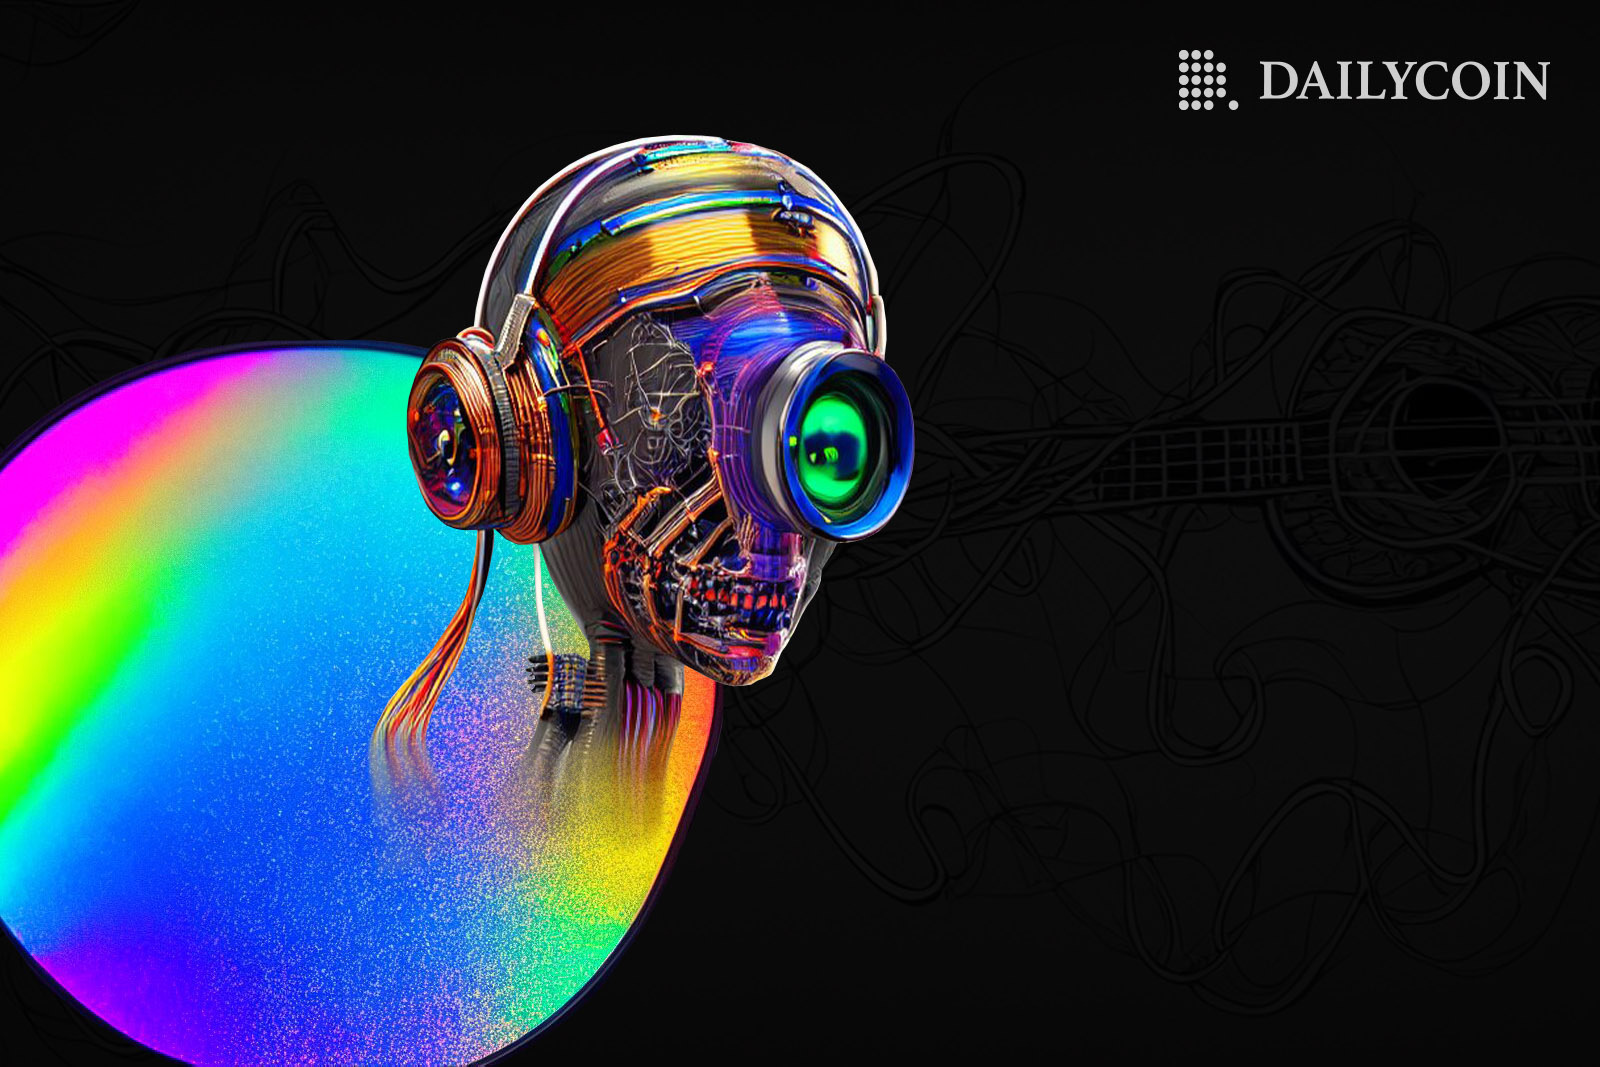 One eyed rainbow robot with headphones on.